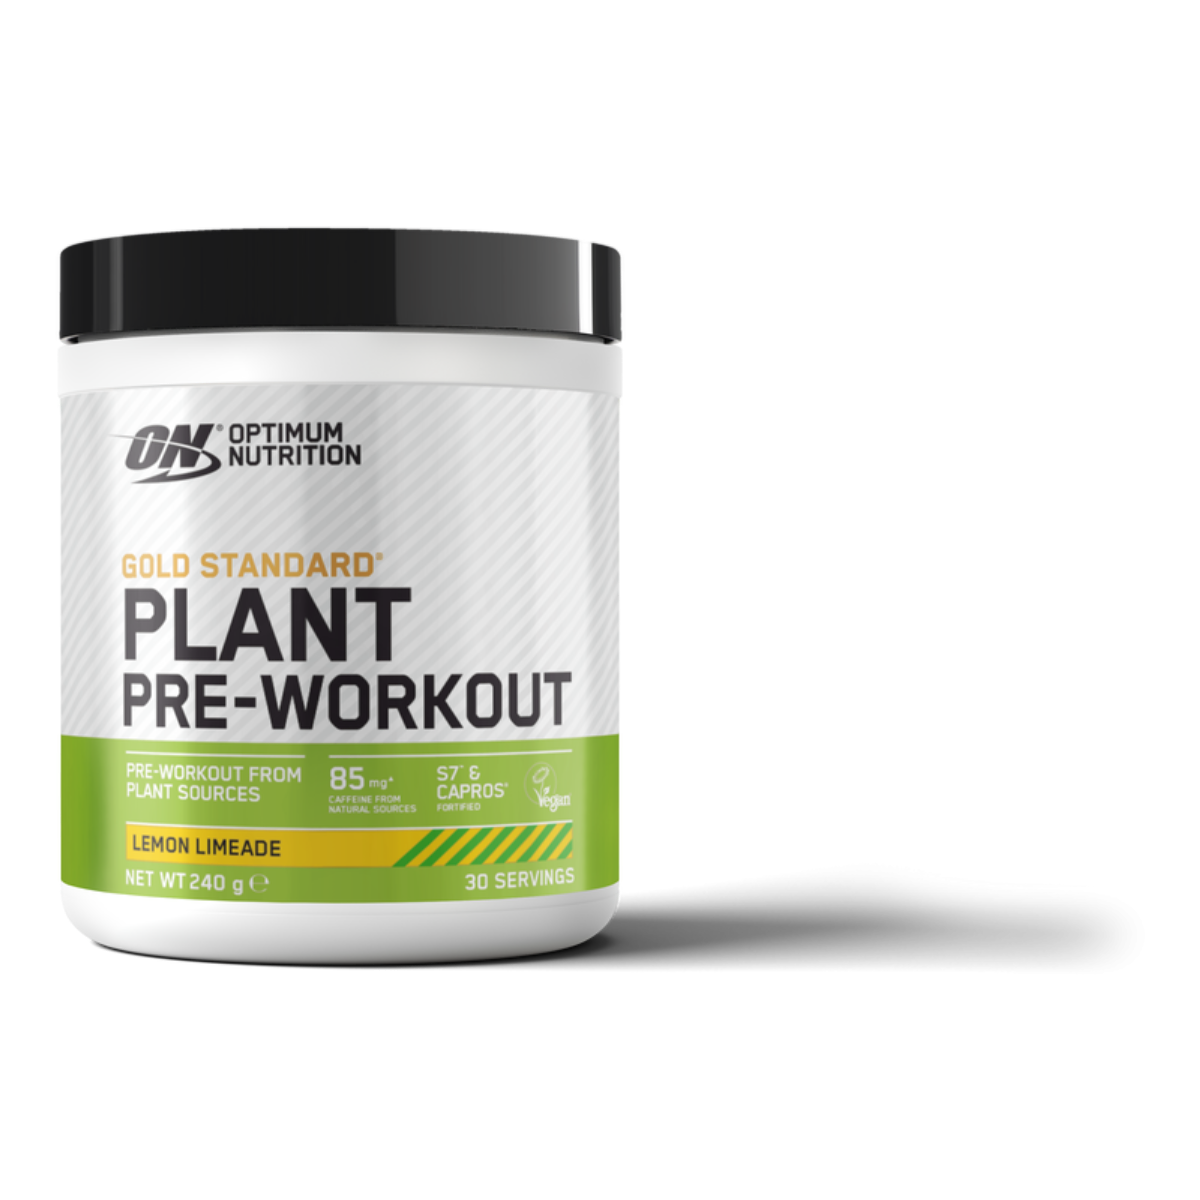 E-shop Gold Standard Plant Pre-Workout - Optimum Nutrition, príchuť jahoda, 240g